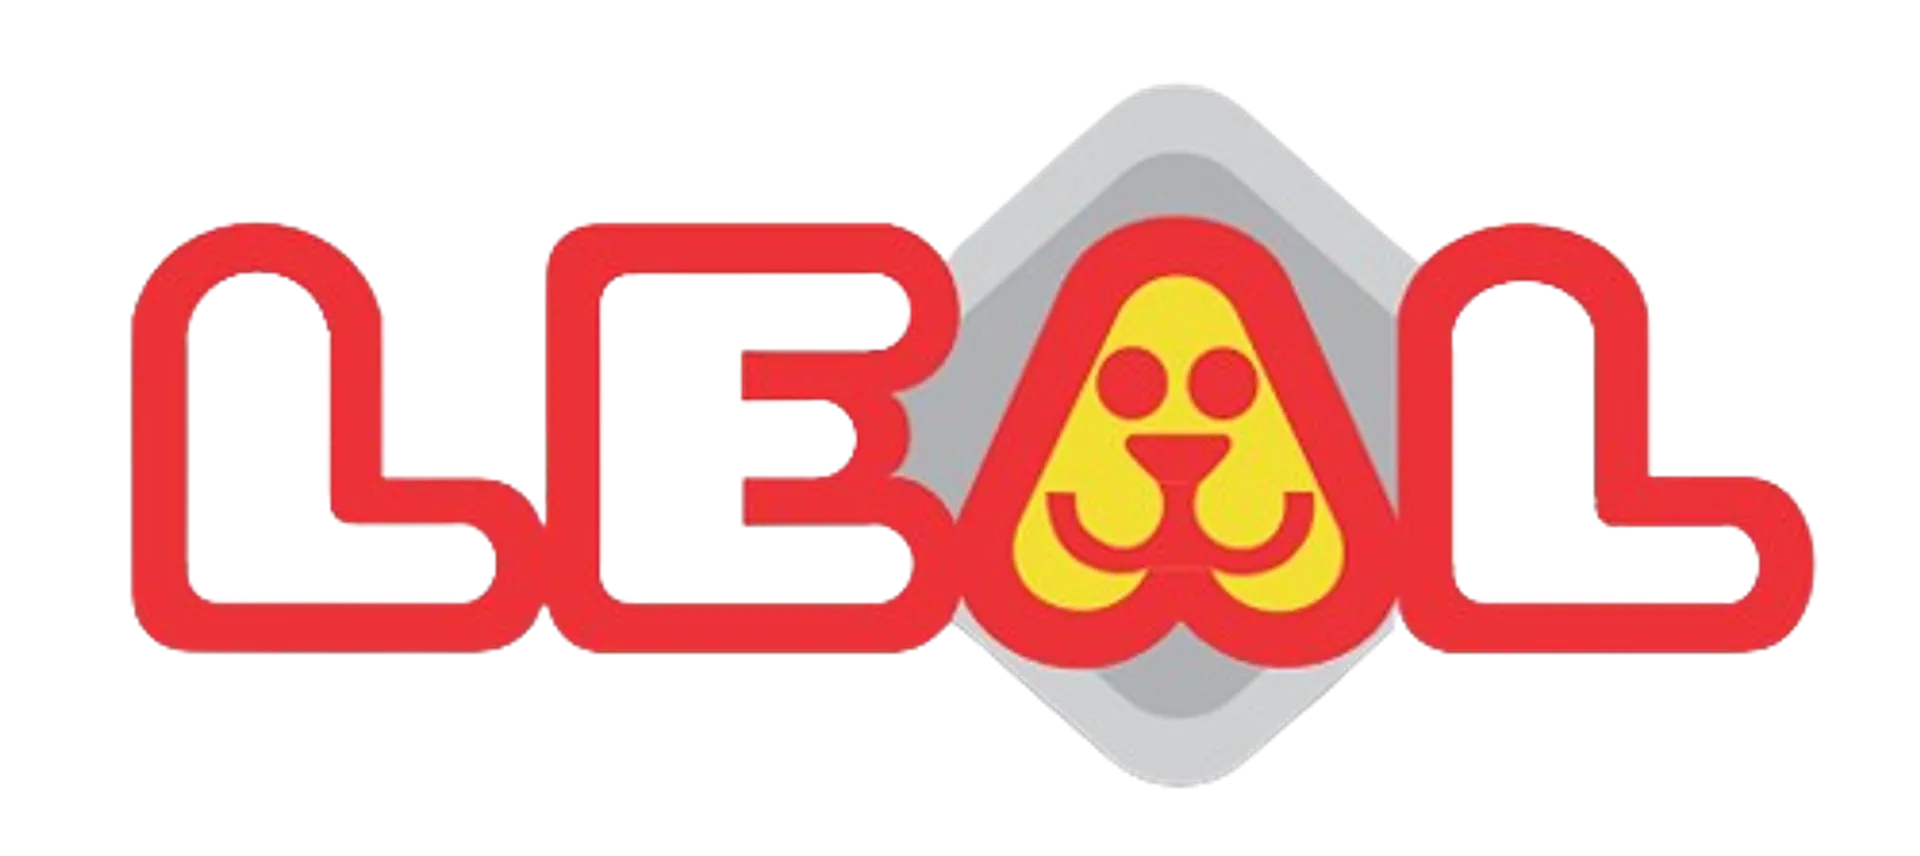 LEAL SUPERMERCADOS logo de catálogo